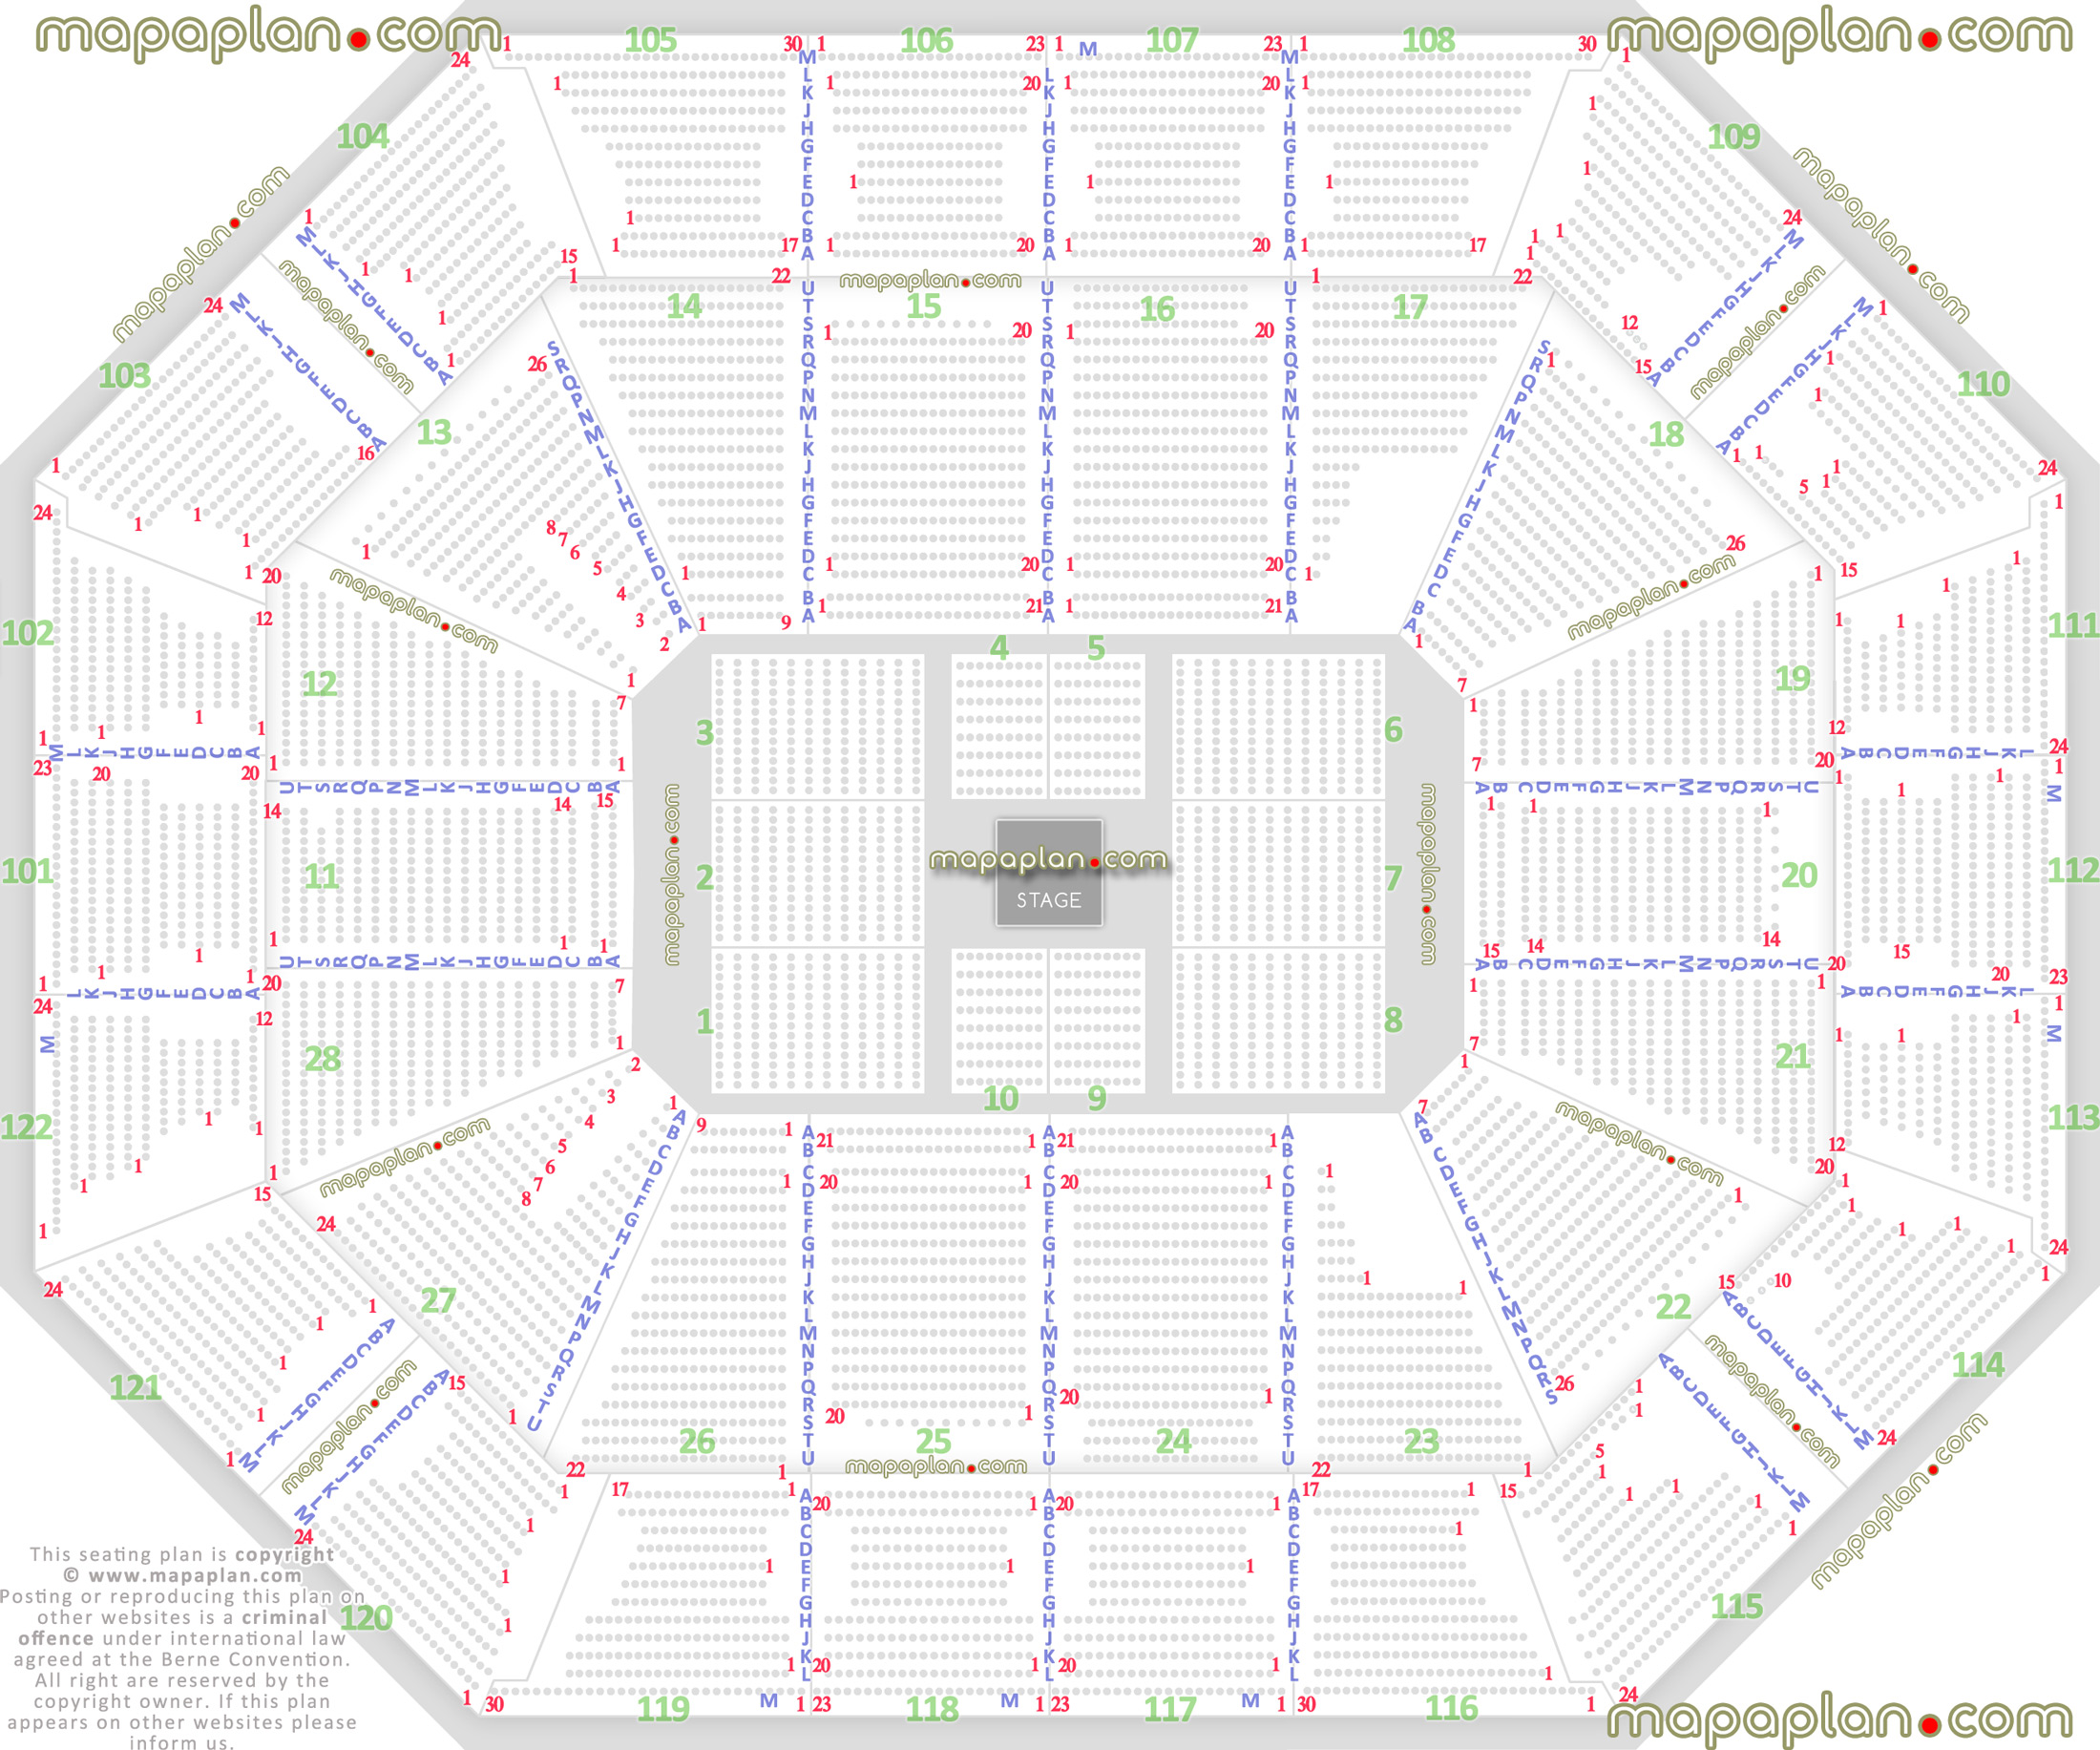 concert round capacity 360 interactive best seat selection arrangement review diagram balcony sections 101 102 103 104 105 106 107 108 109 110 111 112 113 114 115 116 117 118 119 120 121 122 Uncasville Mohegan Sun Arena seating chart